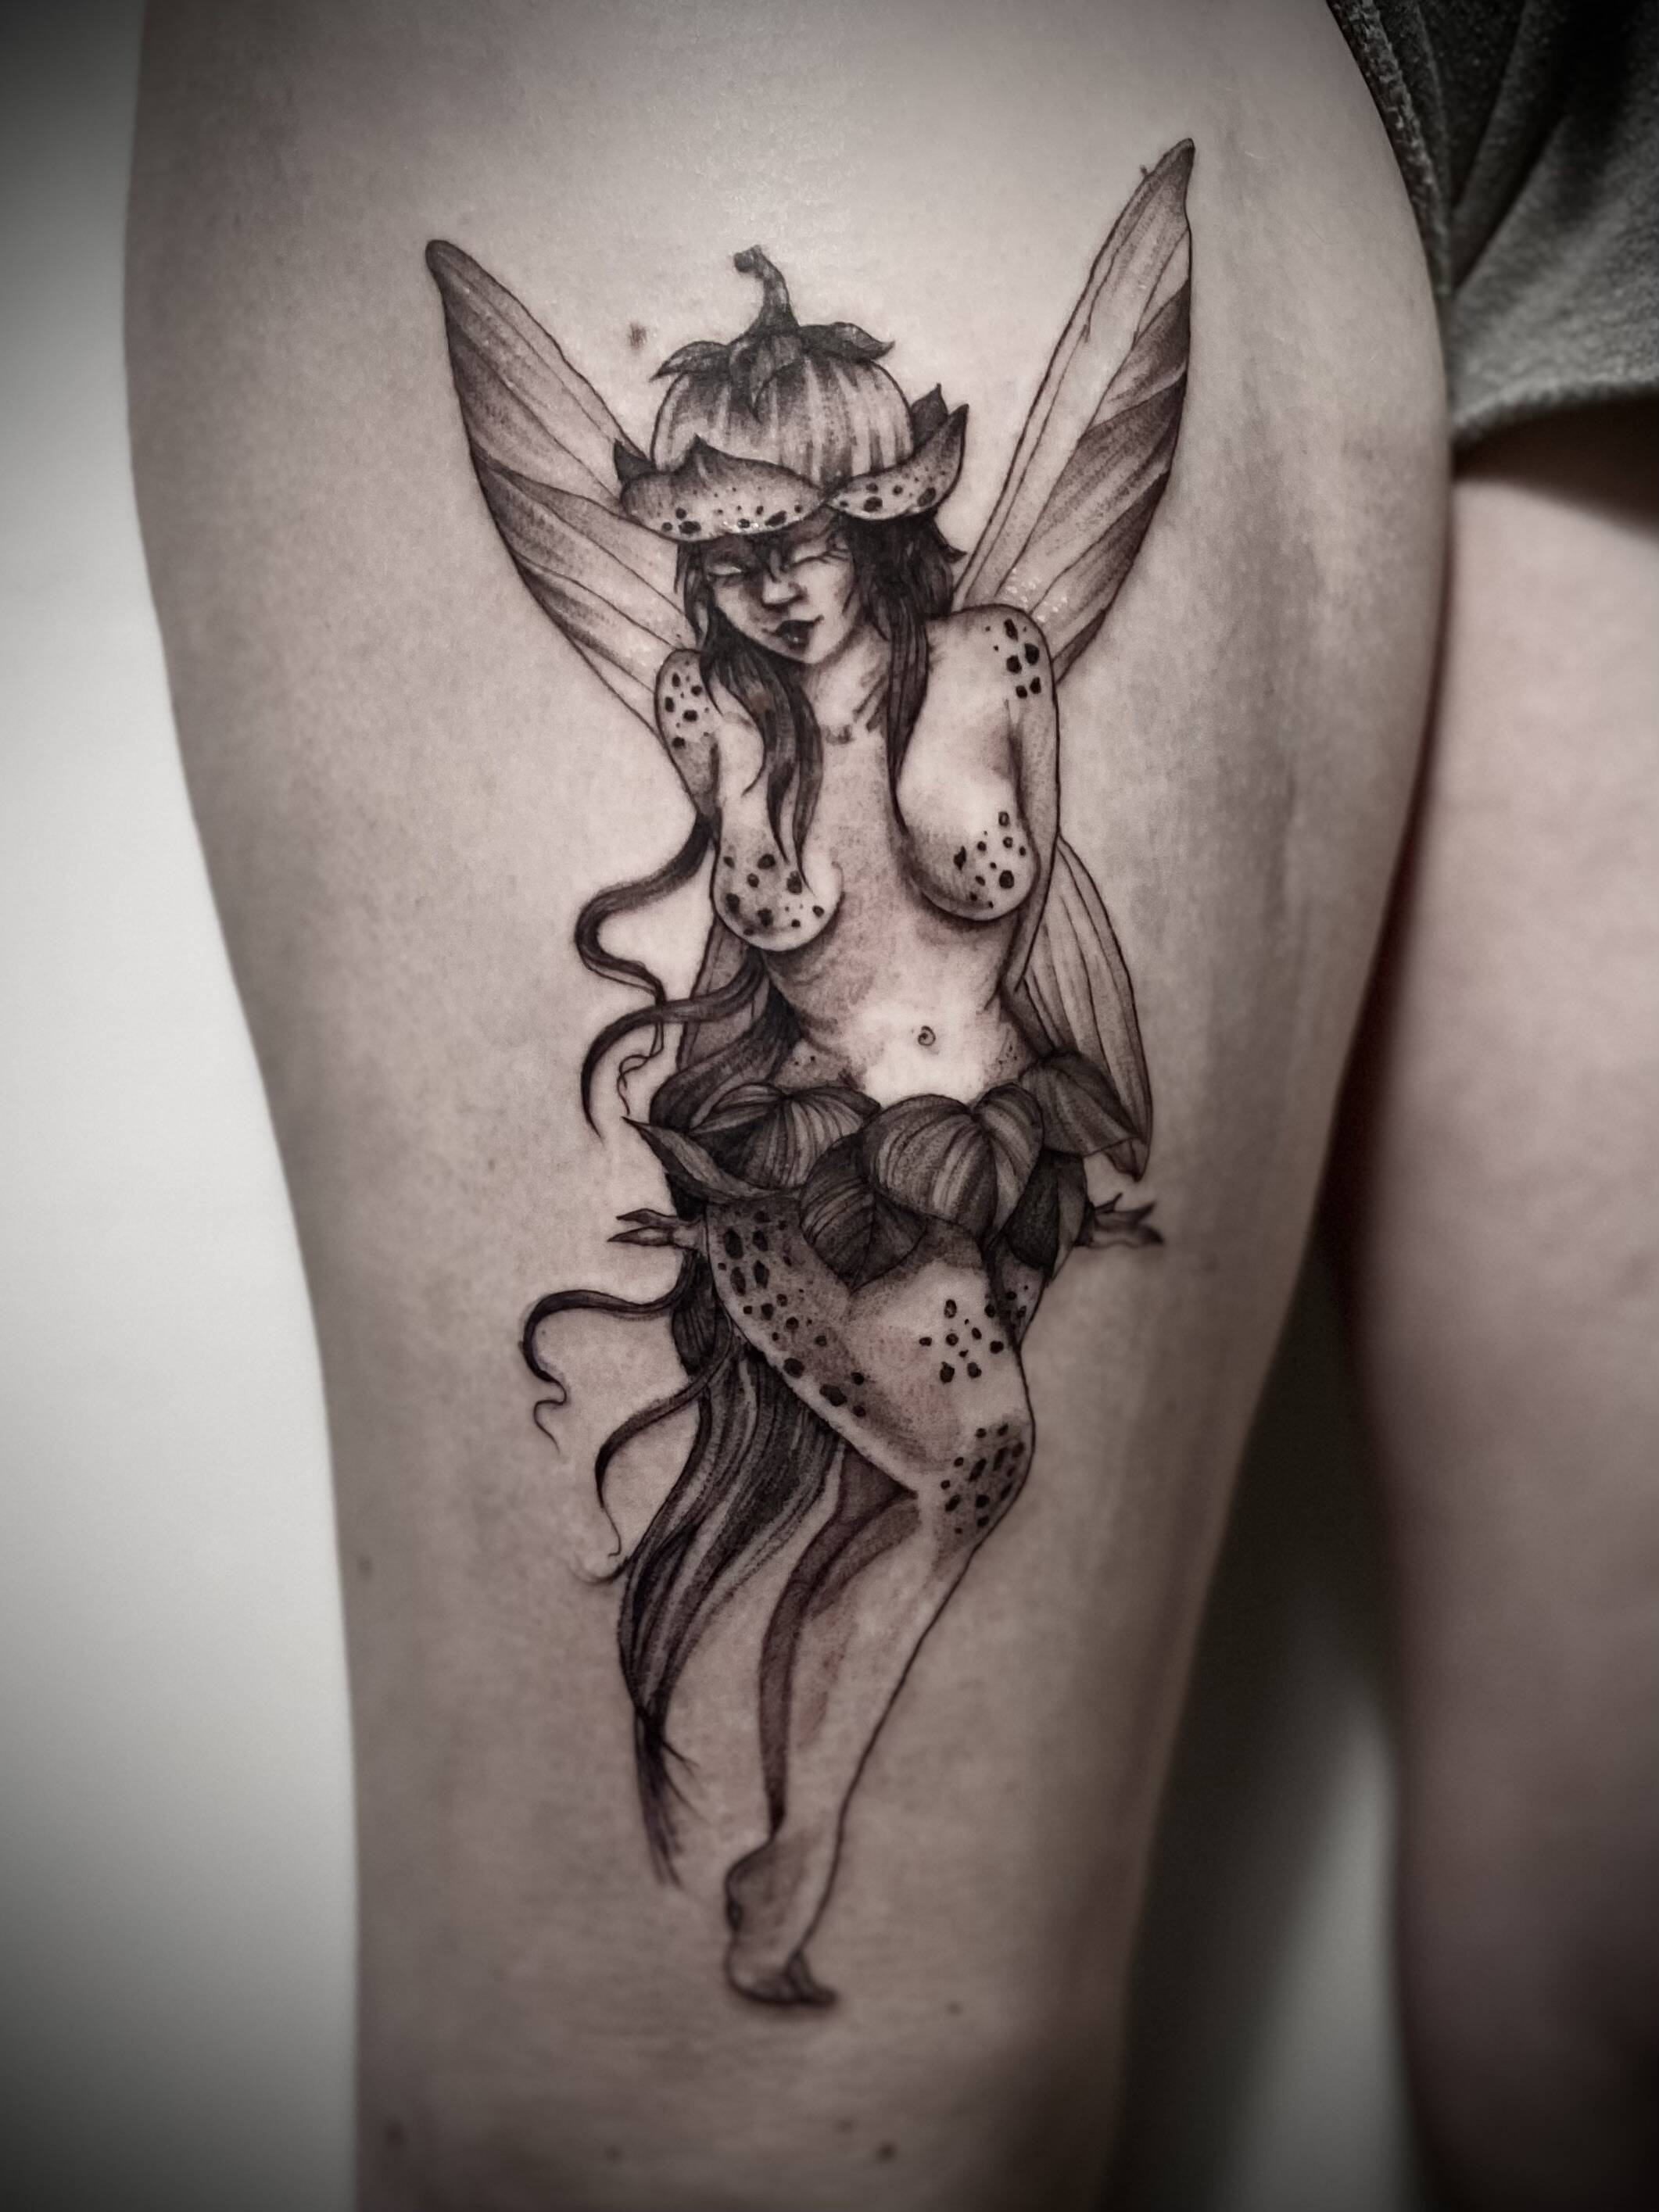 Feminine Fairy Tattoo Ideas that Bring Joy - Tattoo Glee